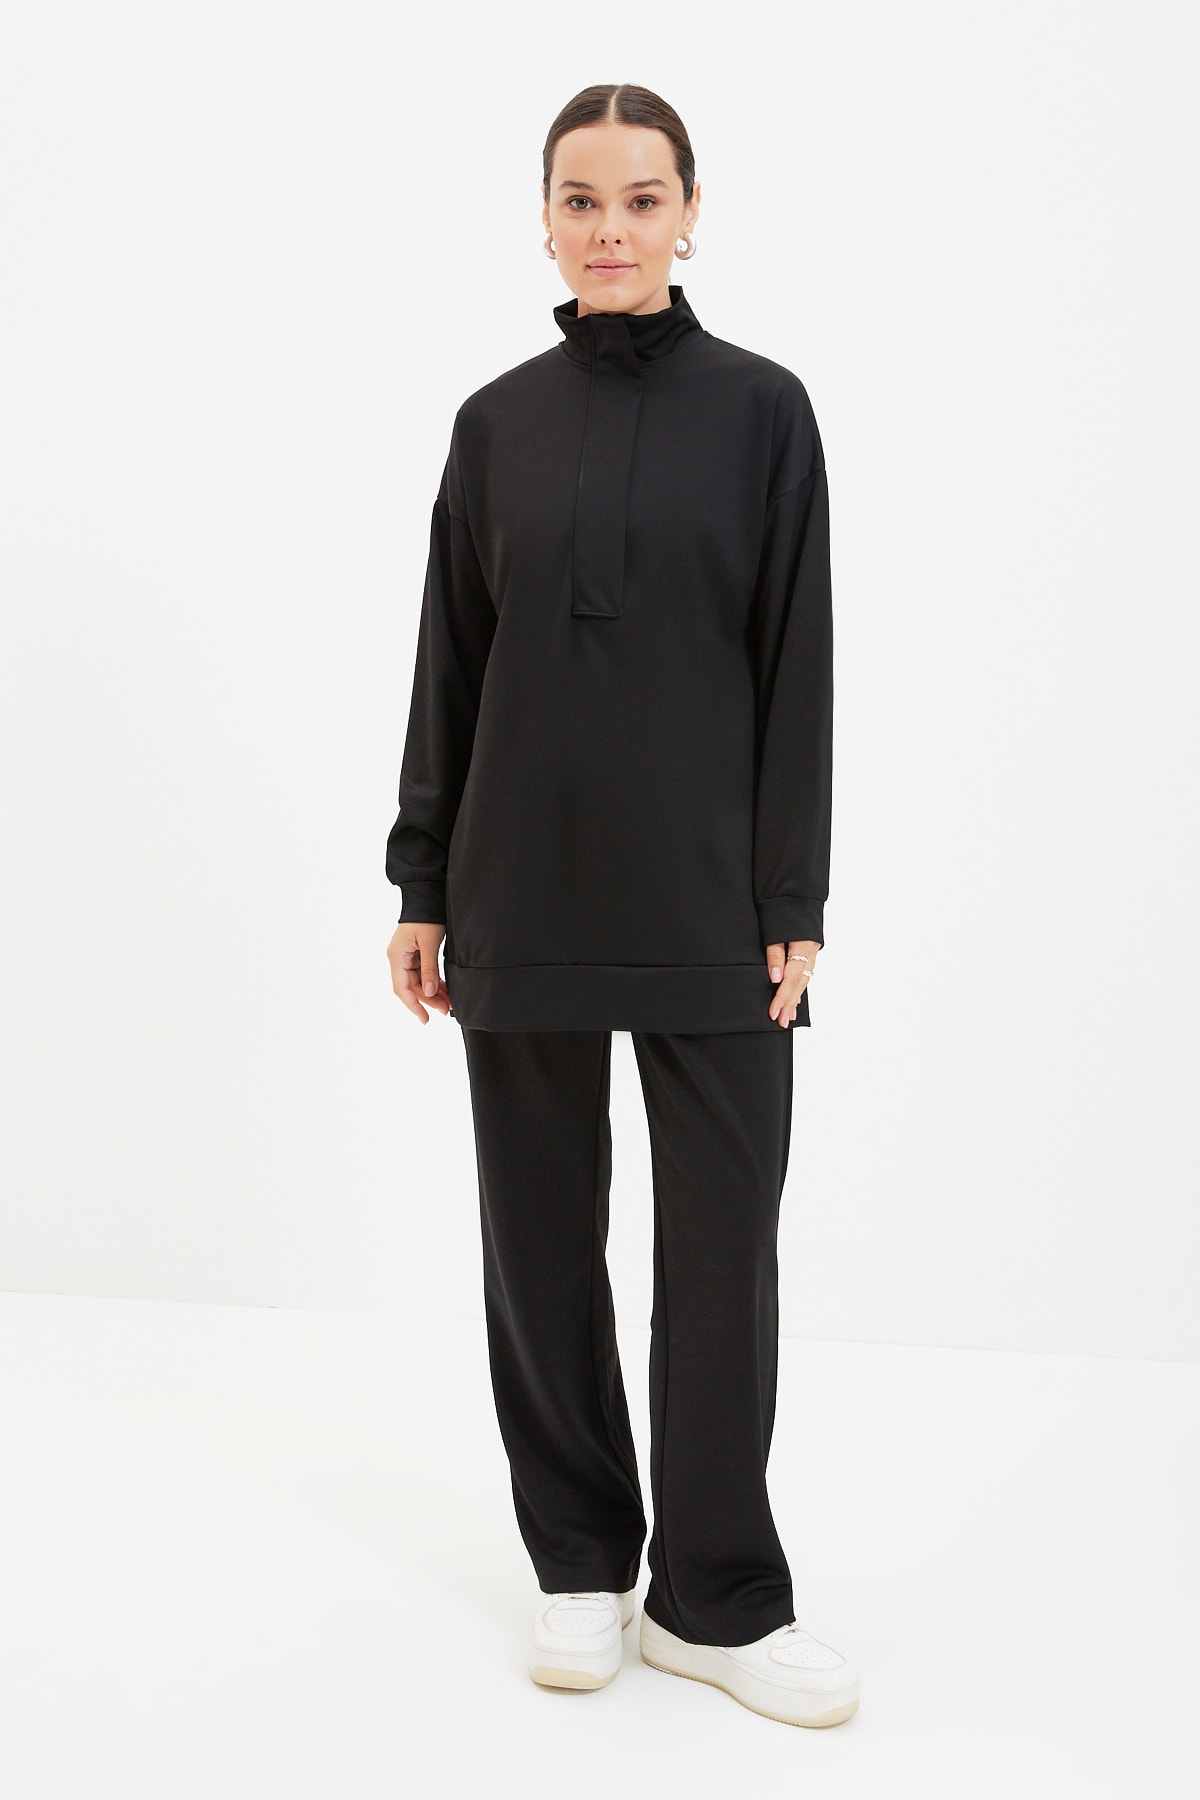 Trendyol Modest Sweatsuit Set - Black - Regular fit